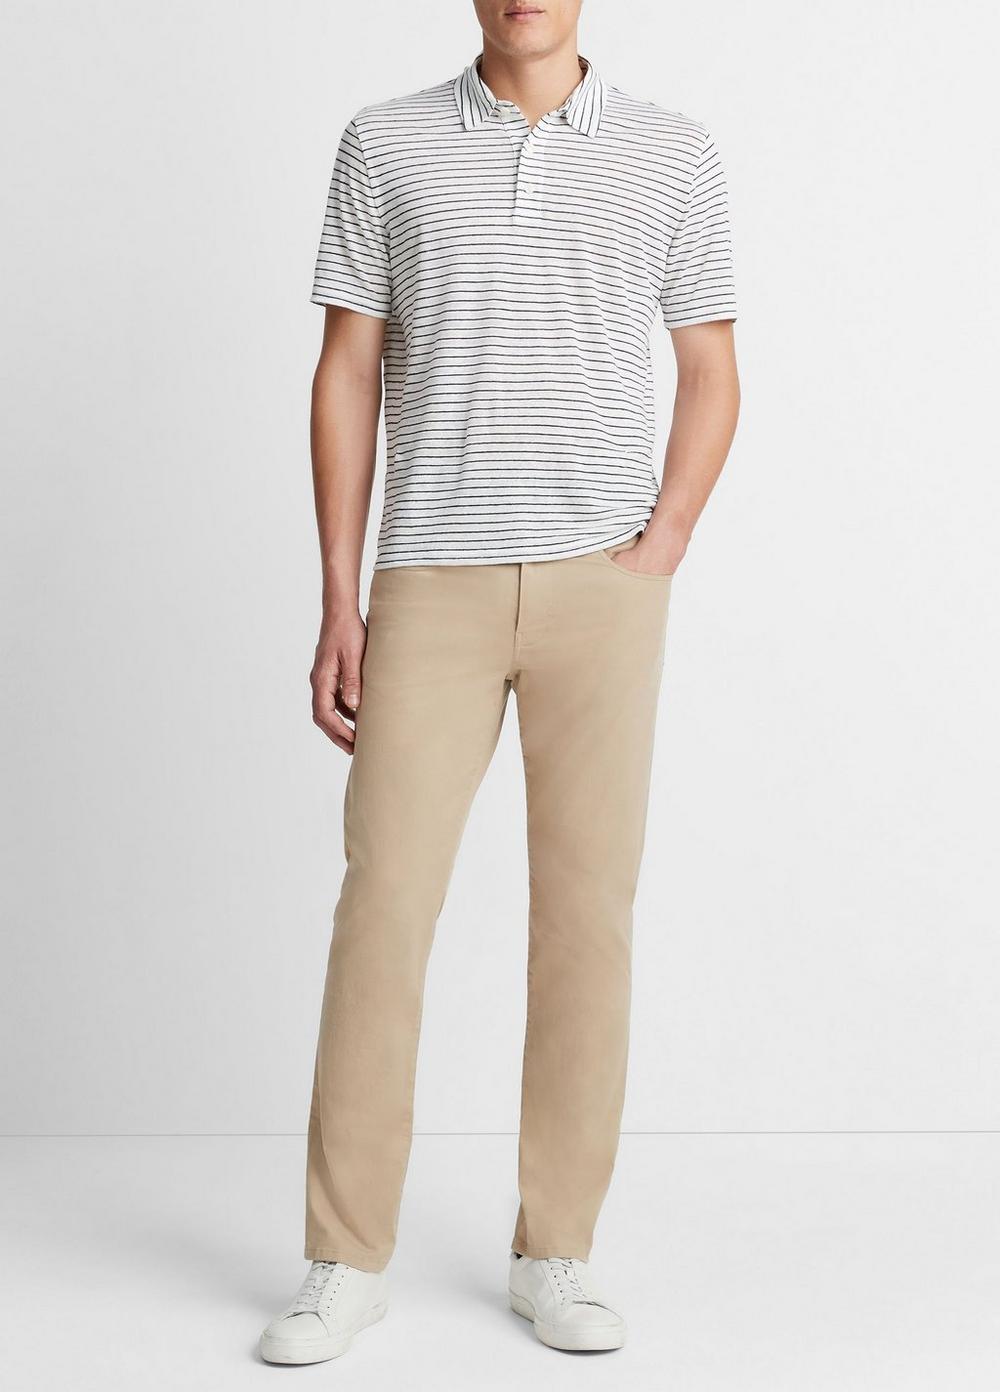 Striped Linen Short-Sleeve Polo Shirt, Optic White/coastal Blue, Size XL Vince